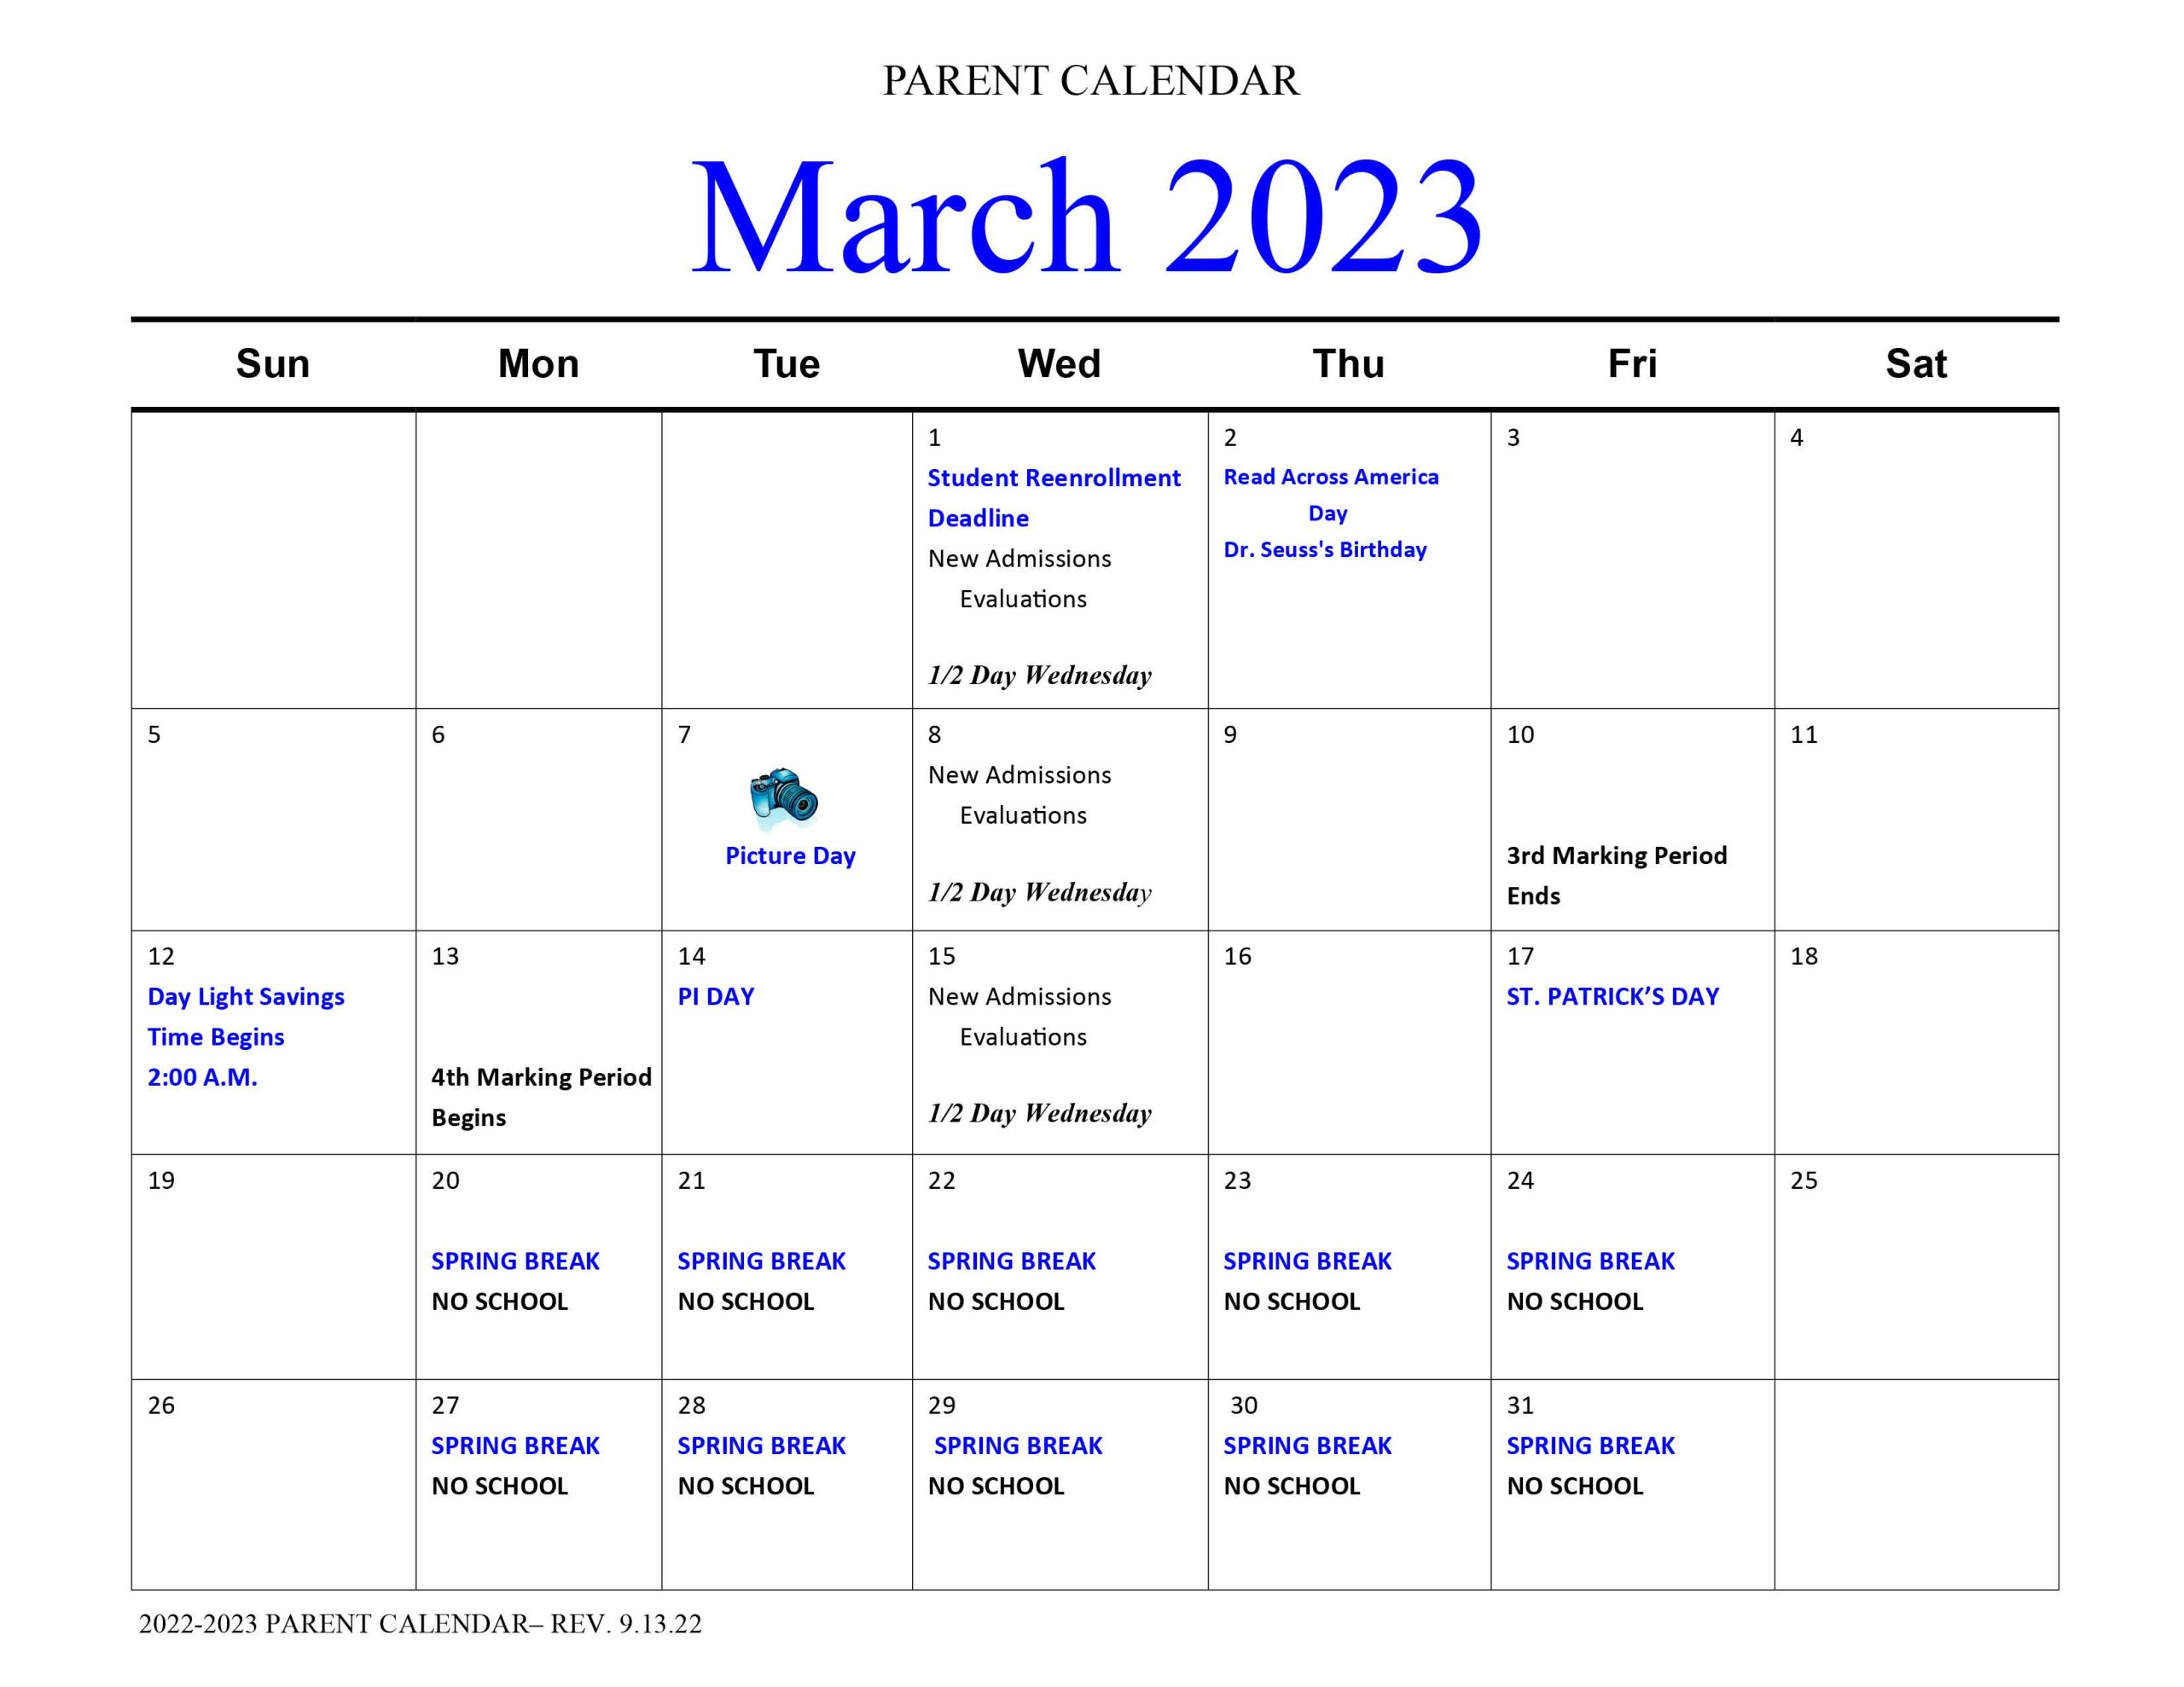 March 2023 Parent Calendar